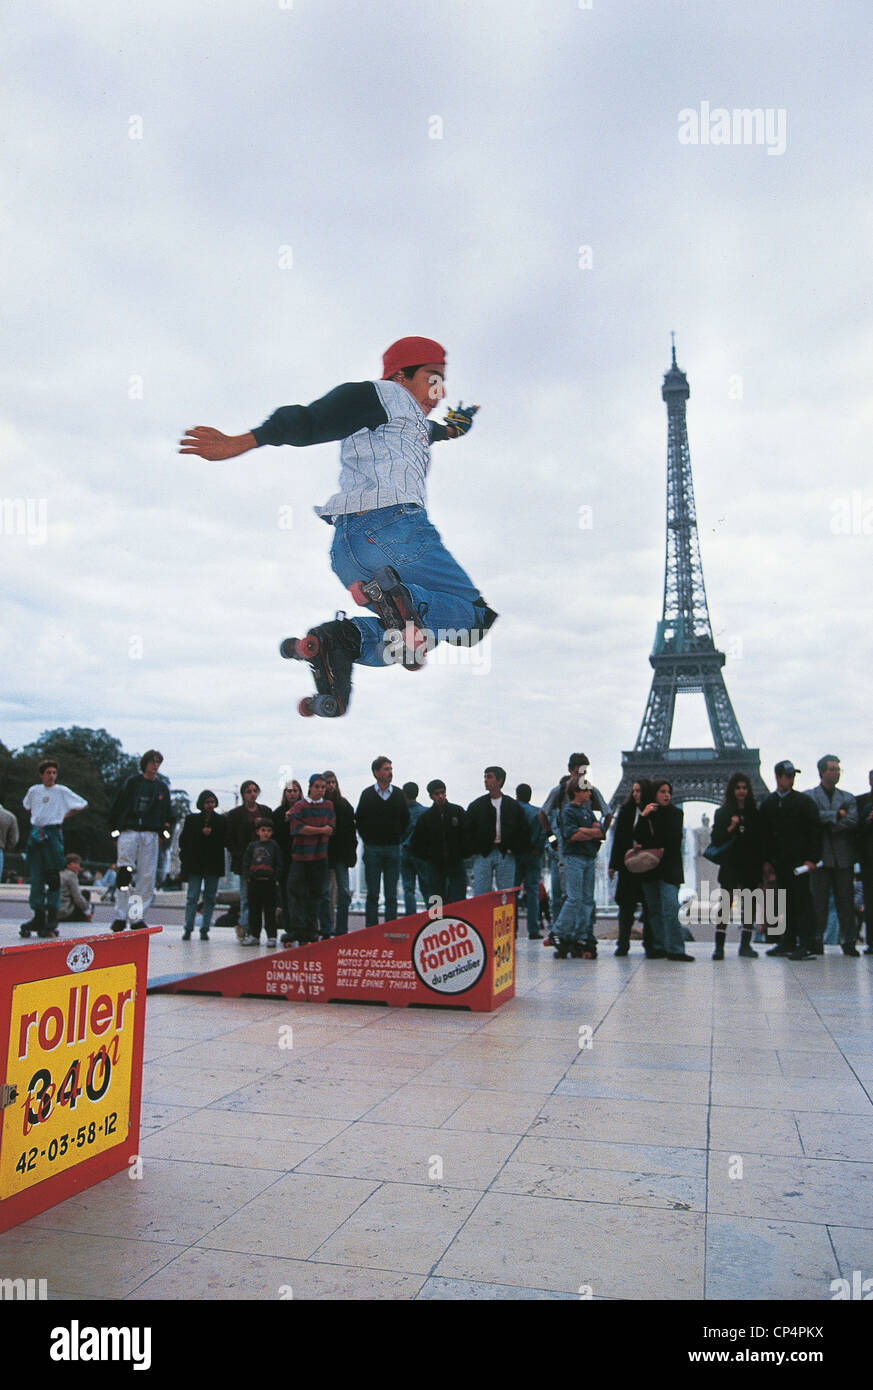 FRANCE PARIS TROCADERO roller Photo Stock - Alamy